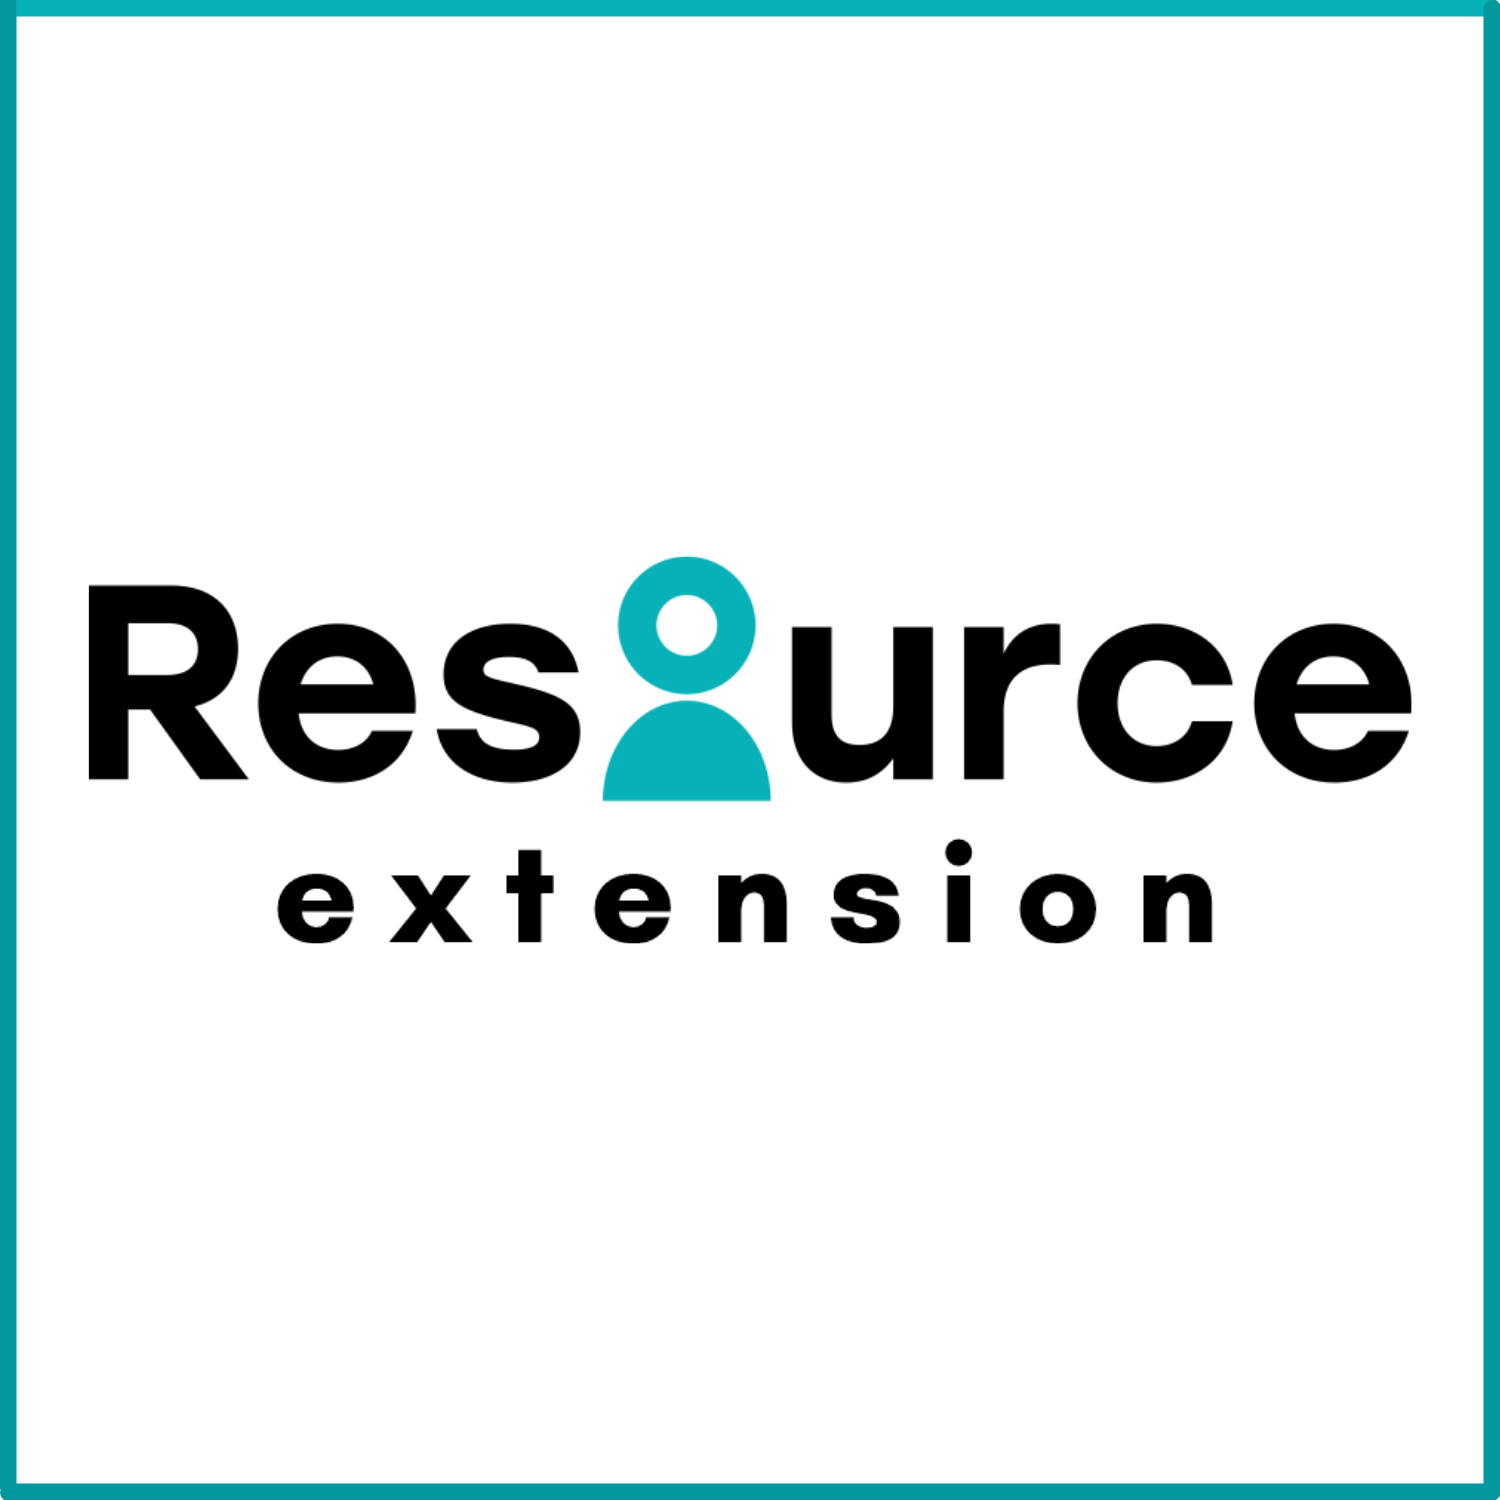 (c) Resourceextension.com